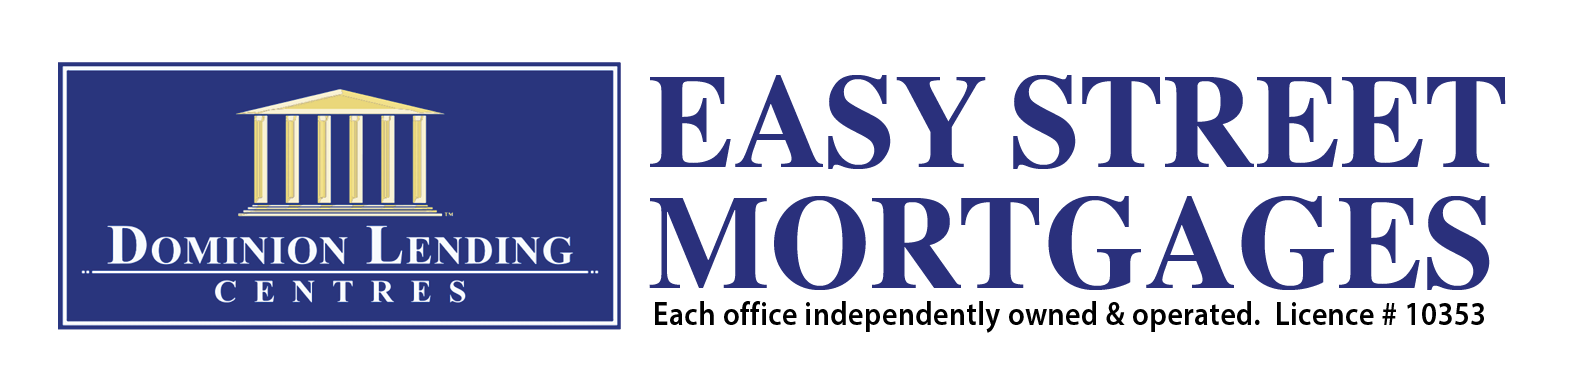 DLC - Easy Street Mortgages